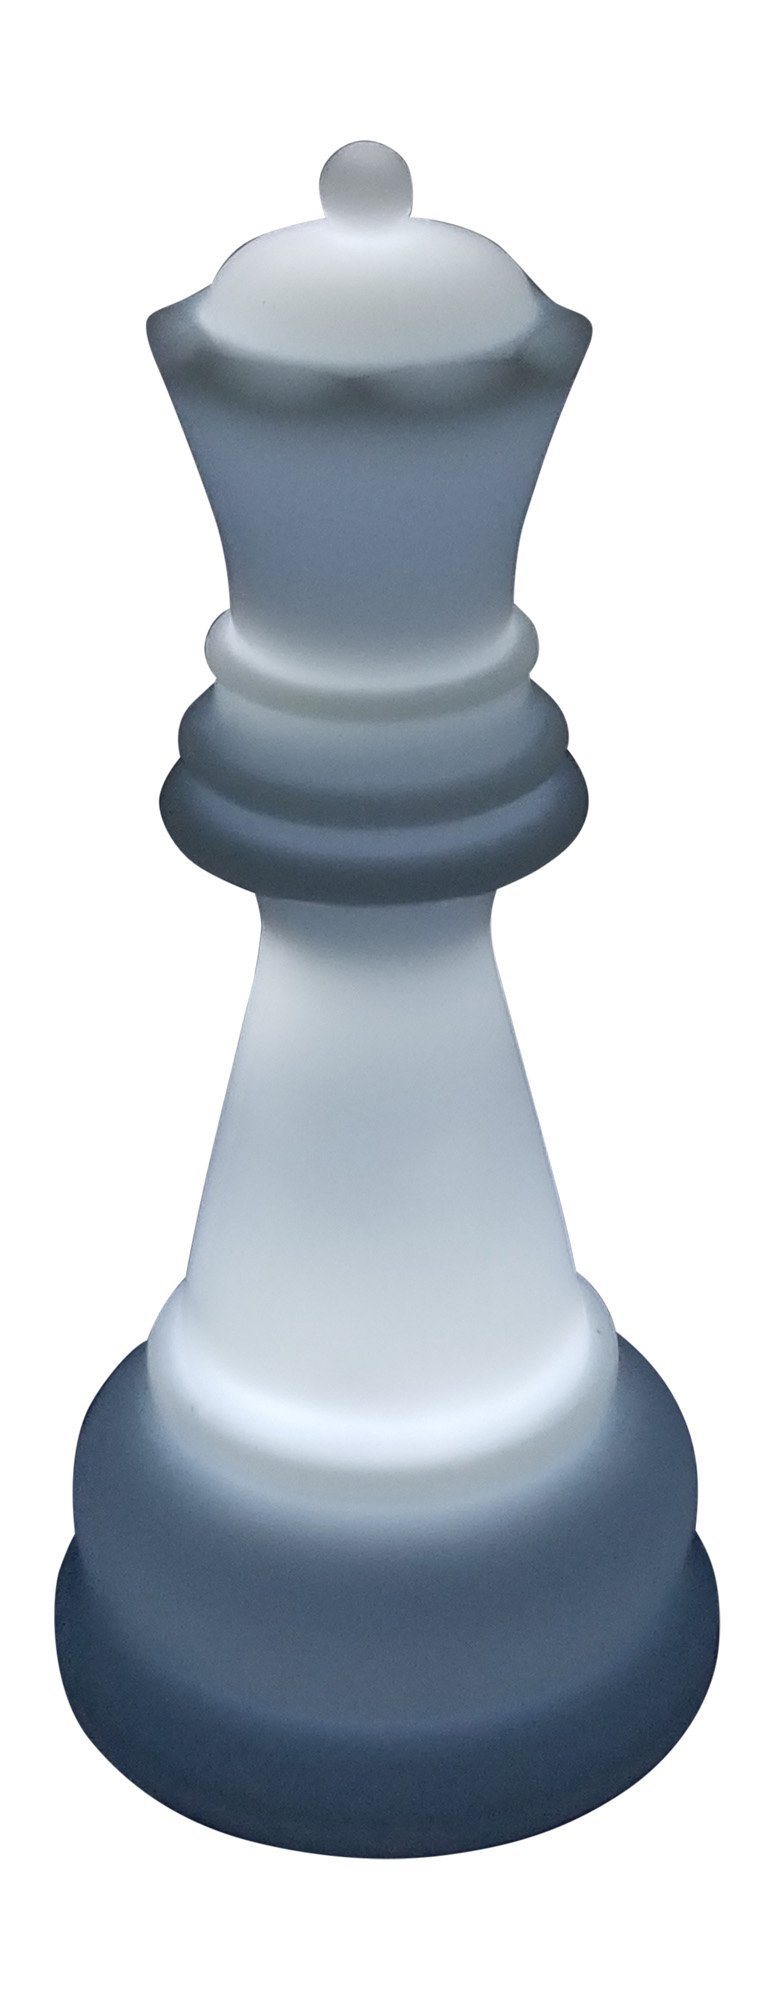 MegaChess 31 Inch Premium Plastic Queen Light-Up Giant Chess Piece - White | Default Title | GiantChessUSA